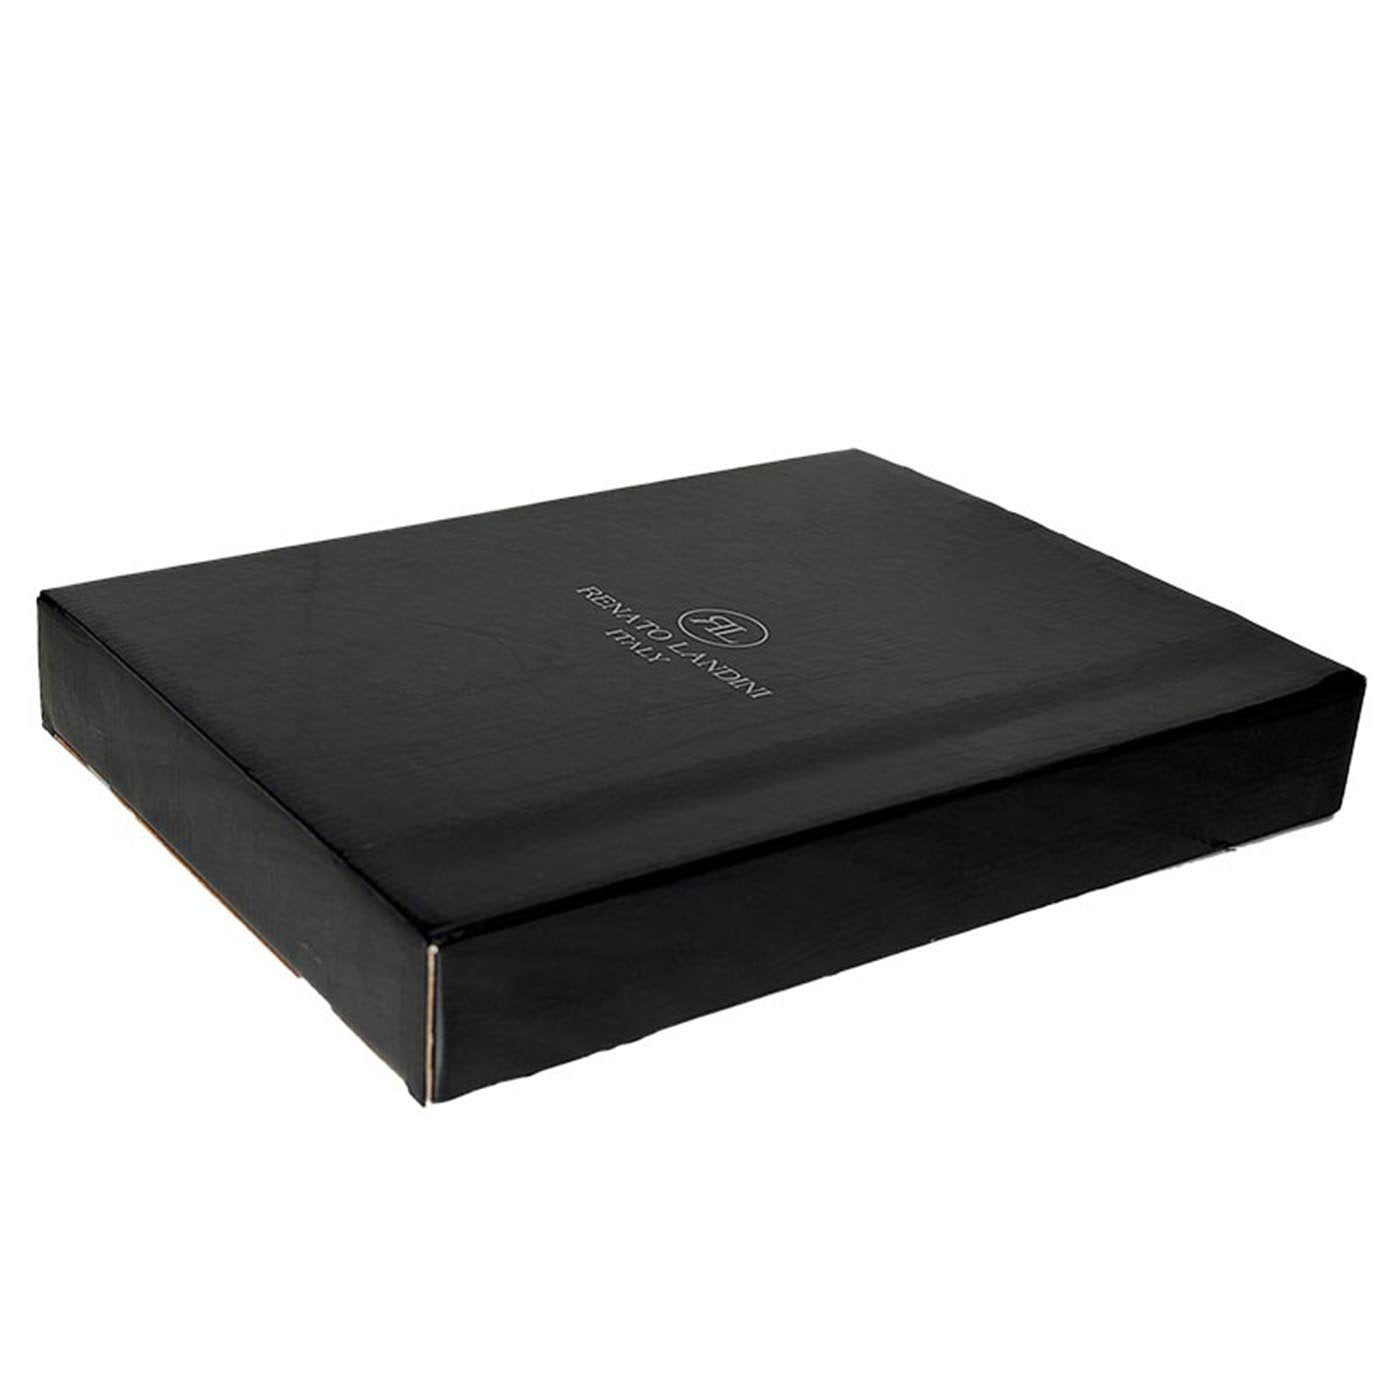 RENATO LANDINI Gift Set: Brown Leather & Fabric A5 Folder + Pen